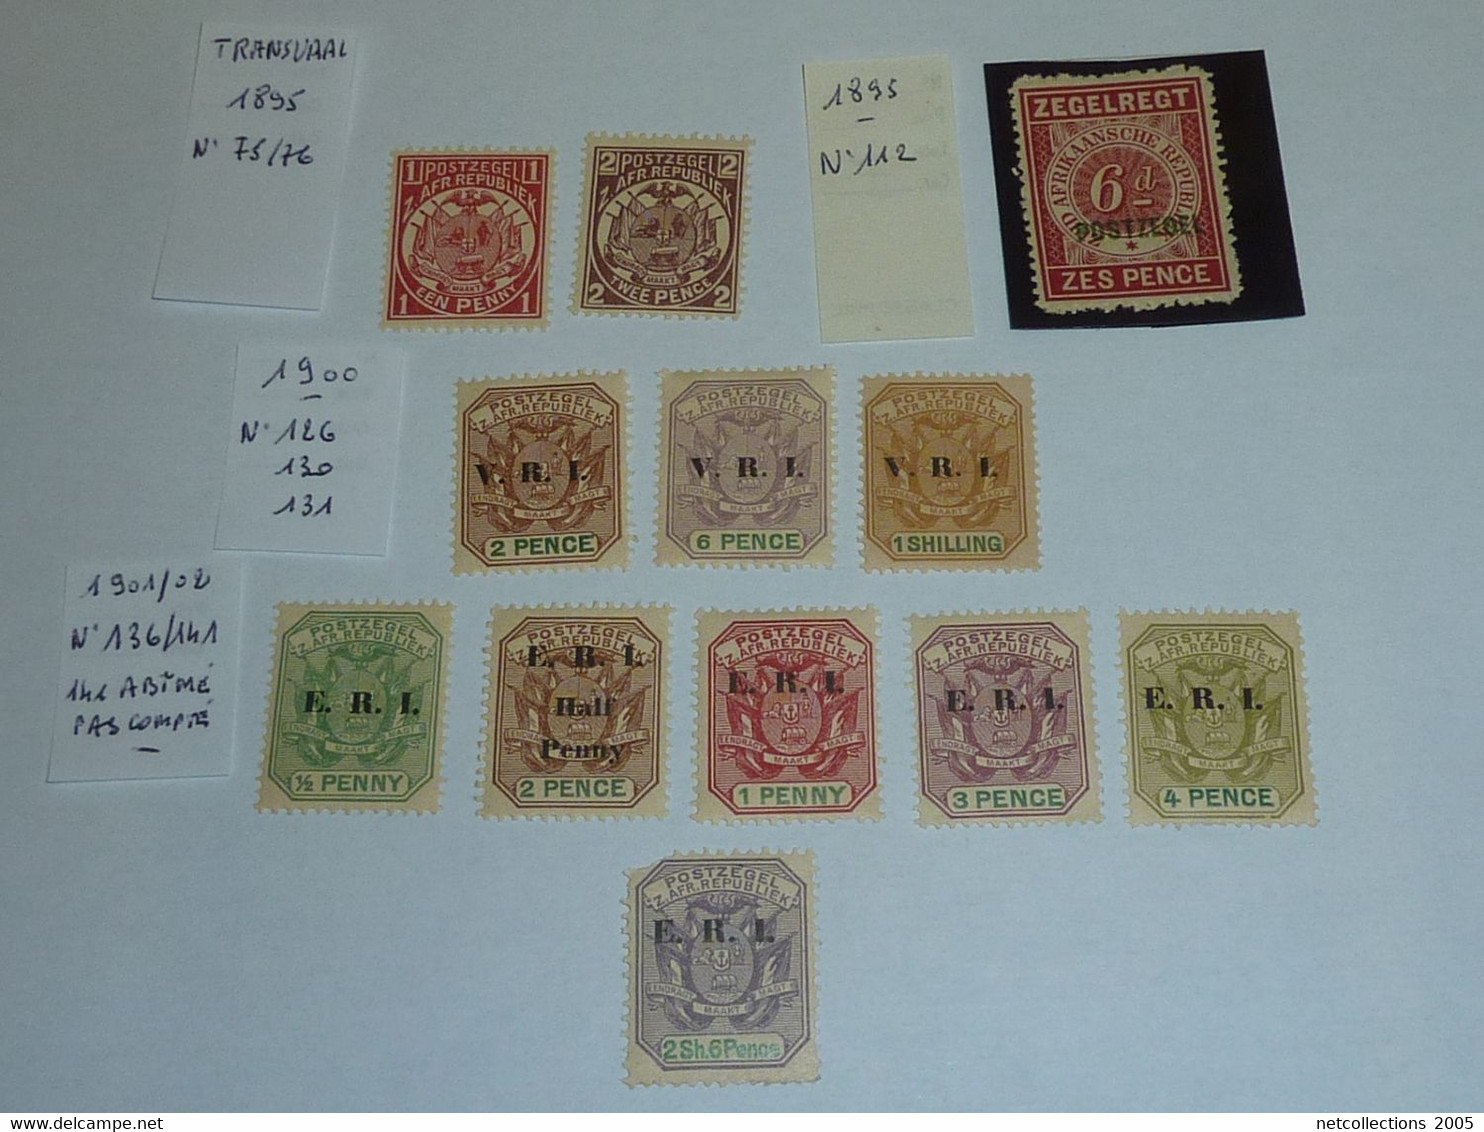 TRANSVAAL ENSEMBLE DE TIMBRES 1895 N°75/76 + N°112 + 126/130/131 + 136/141 - NEUF SANS CHARNIERES - STAMPS U.K (V) - Transvaal (1870-1909)